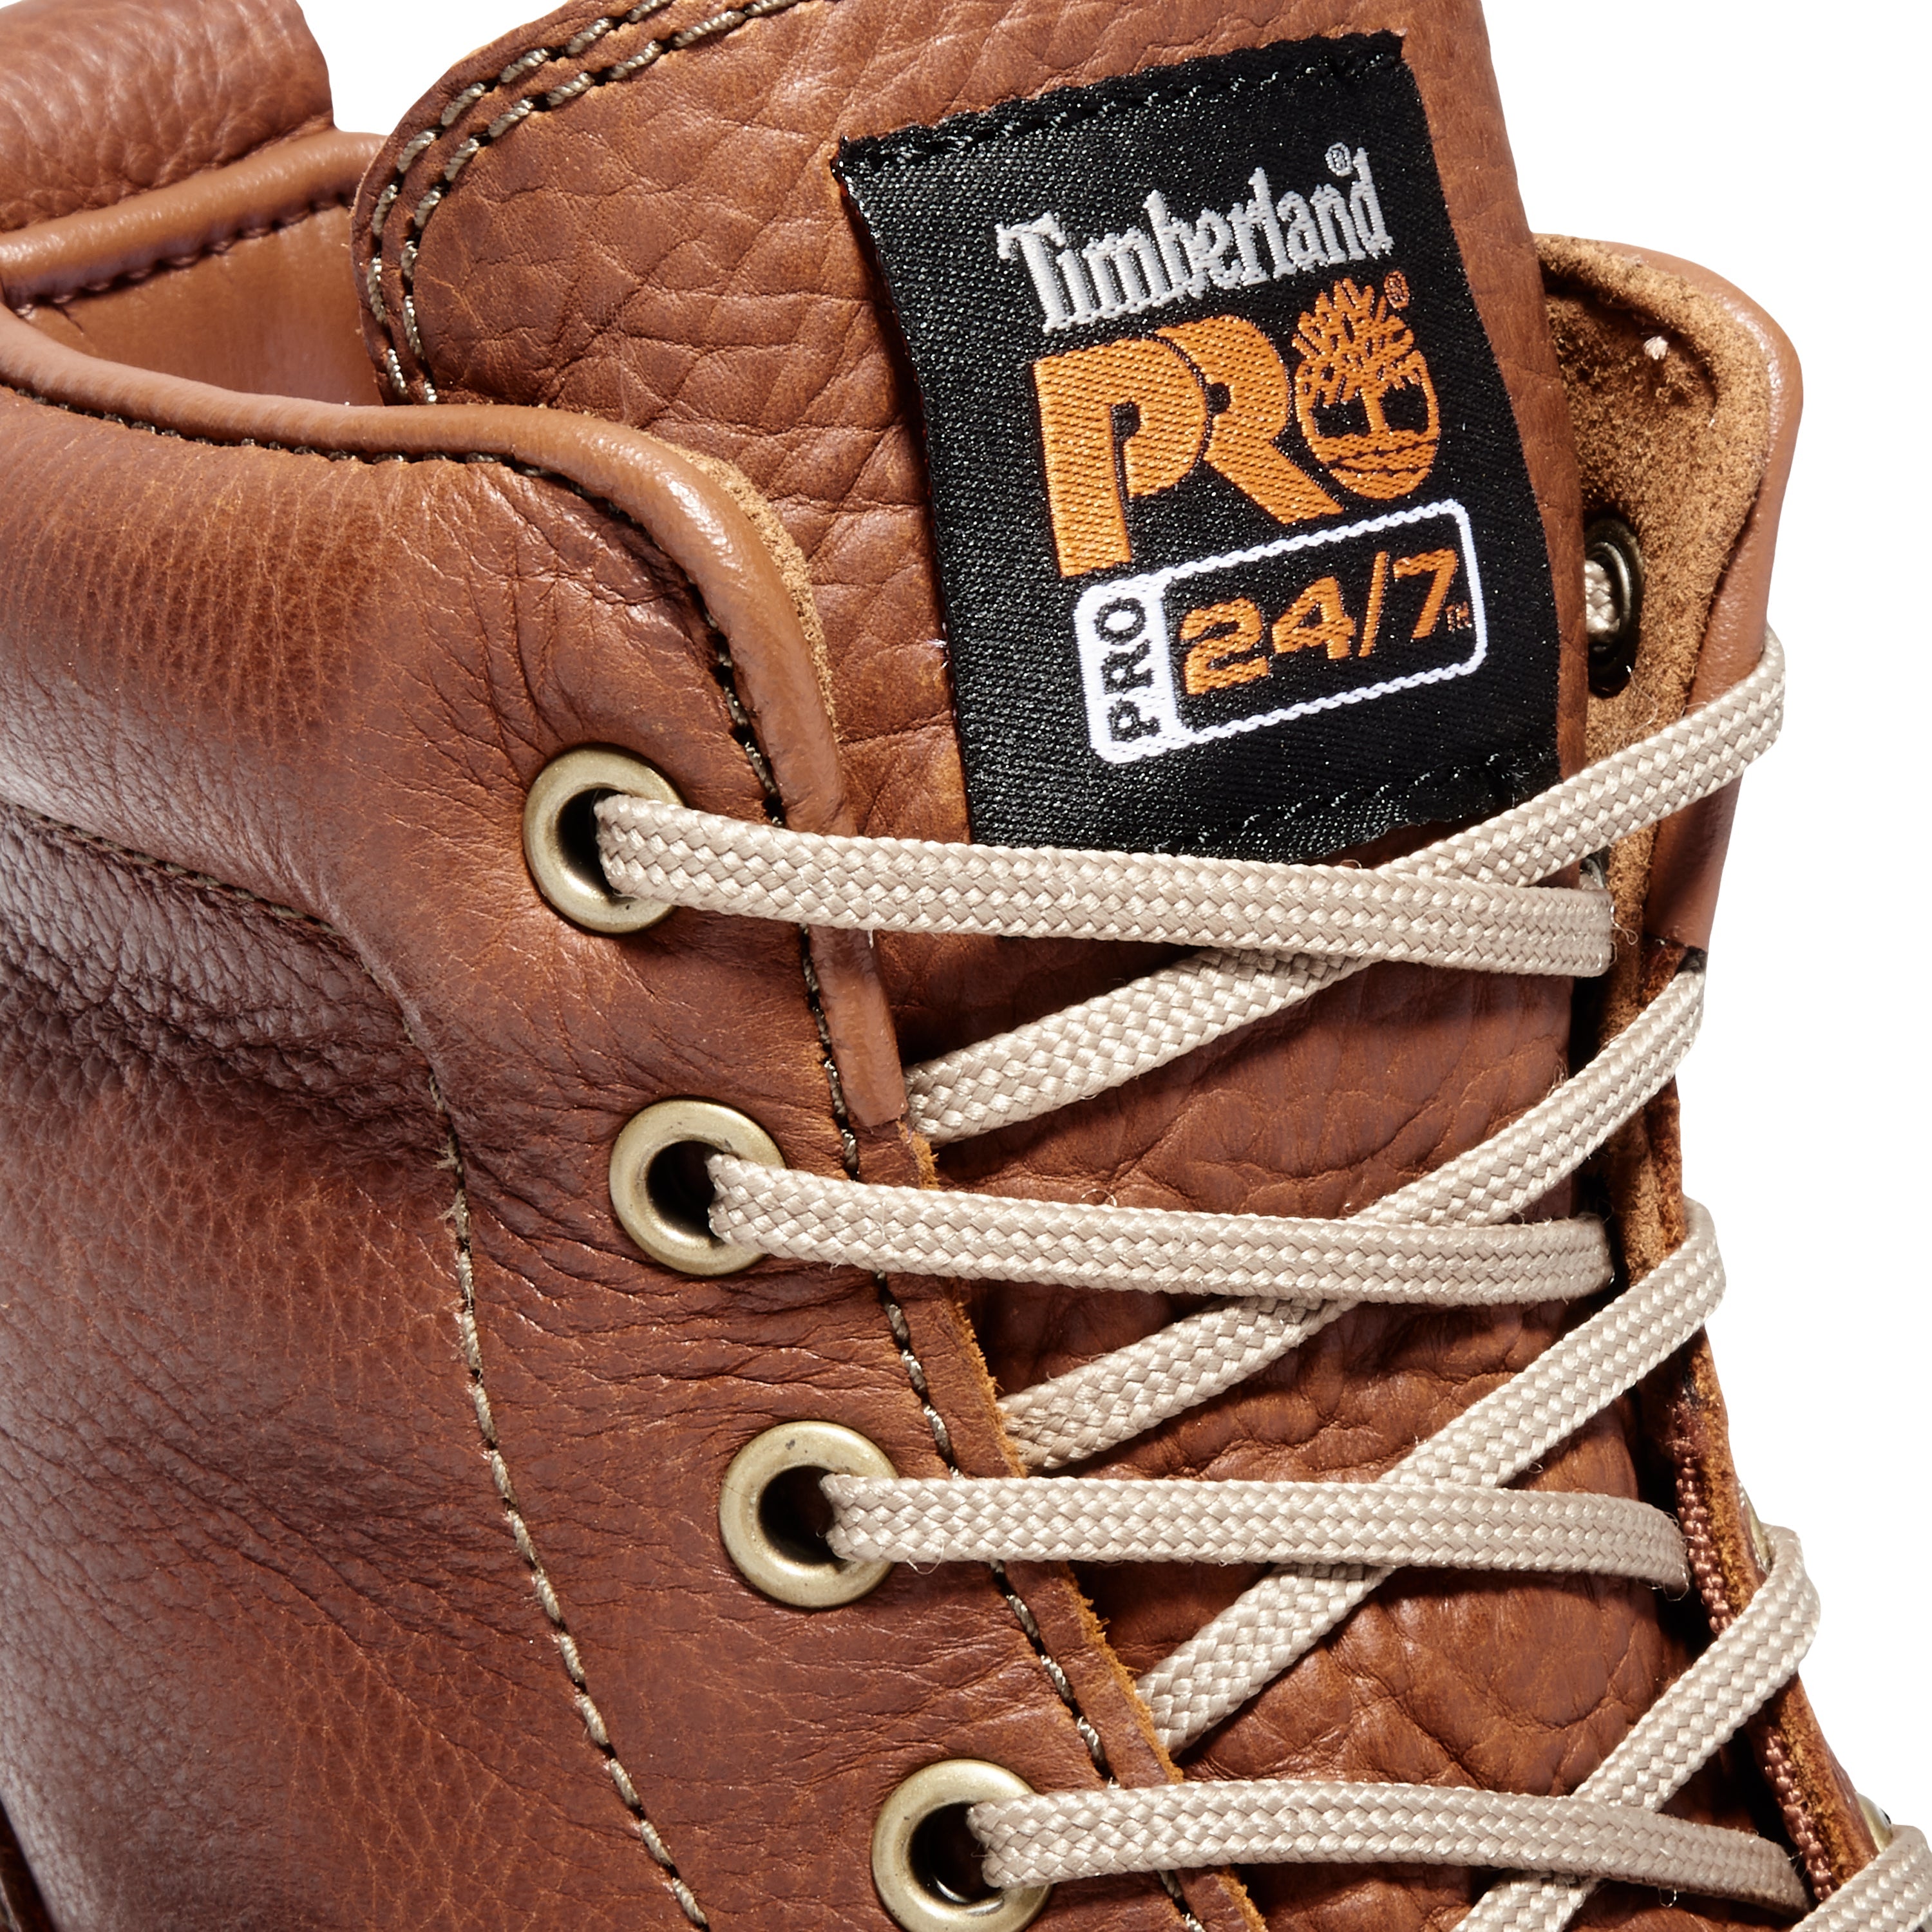 Timberland PRO Men's Wedge 6" Soft Toe Wedge Work Boot - Rust - TB153009214  - Overlook Boots